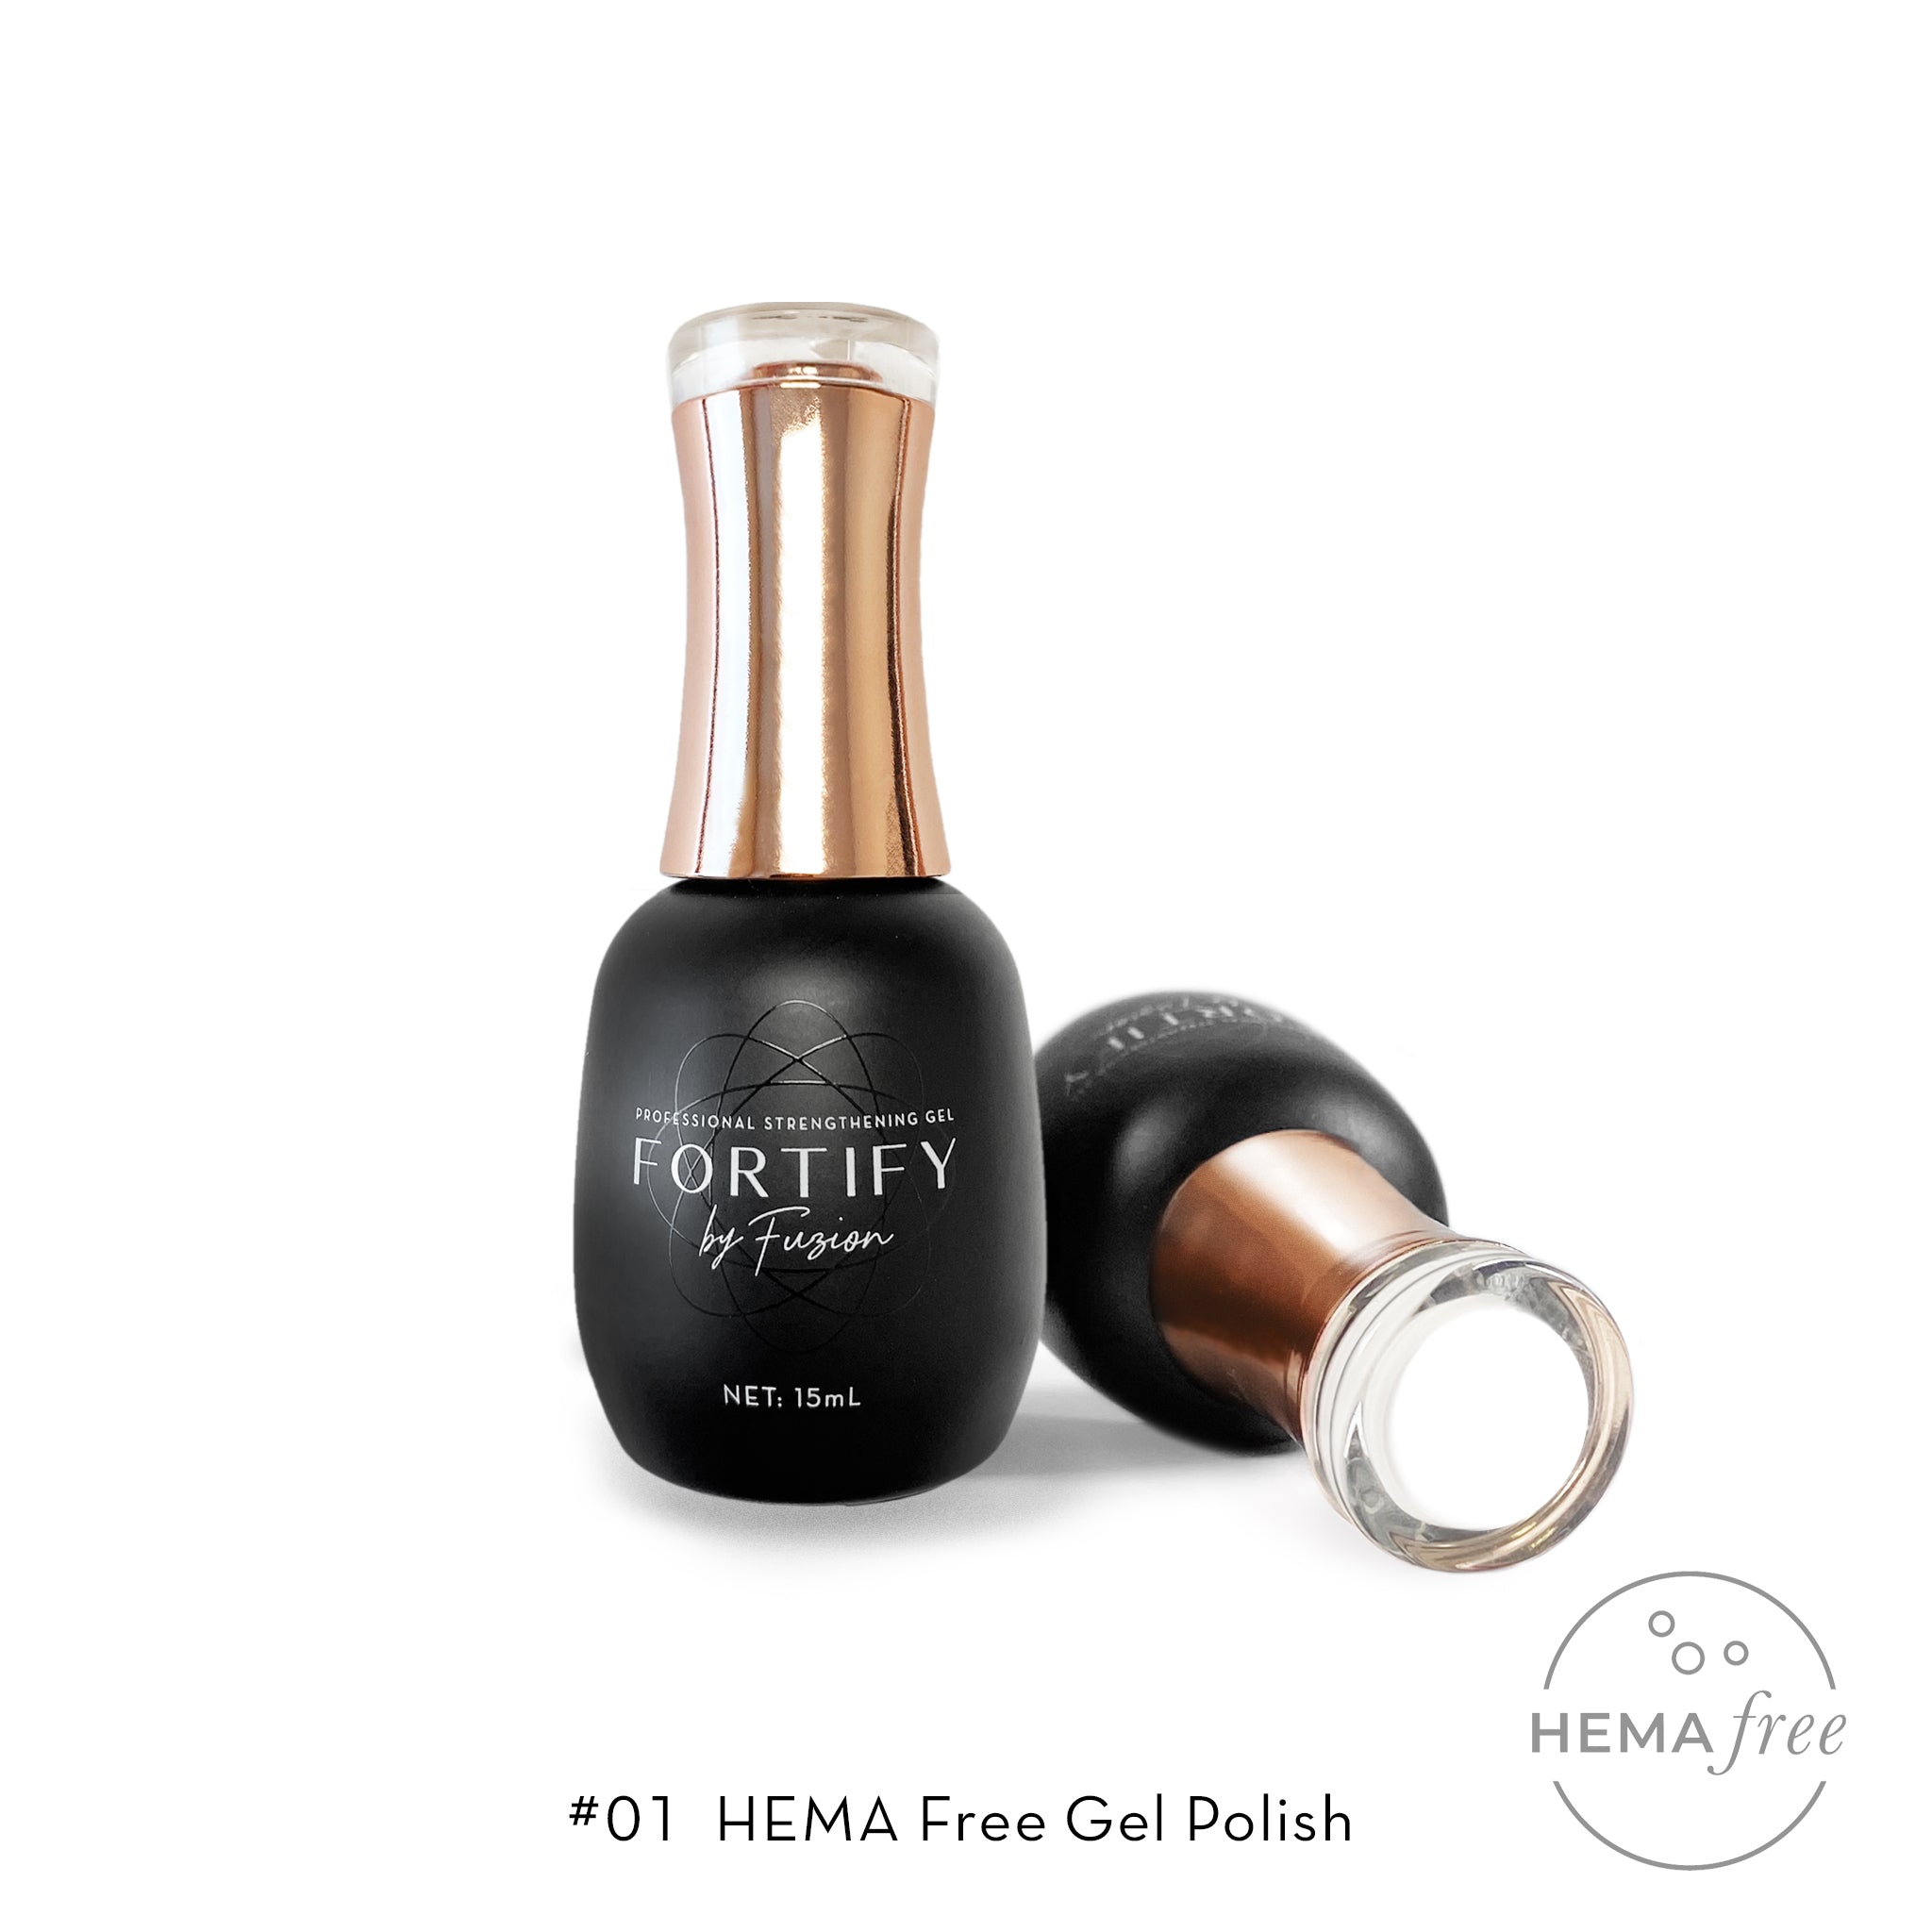 HEMA Free Gel Polish | Fortify by Fuzion | Colour 01